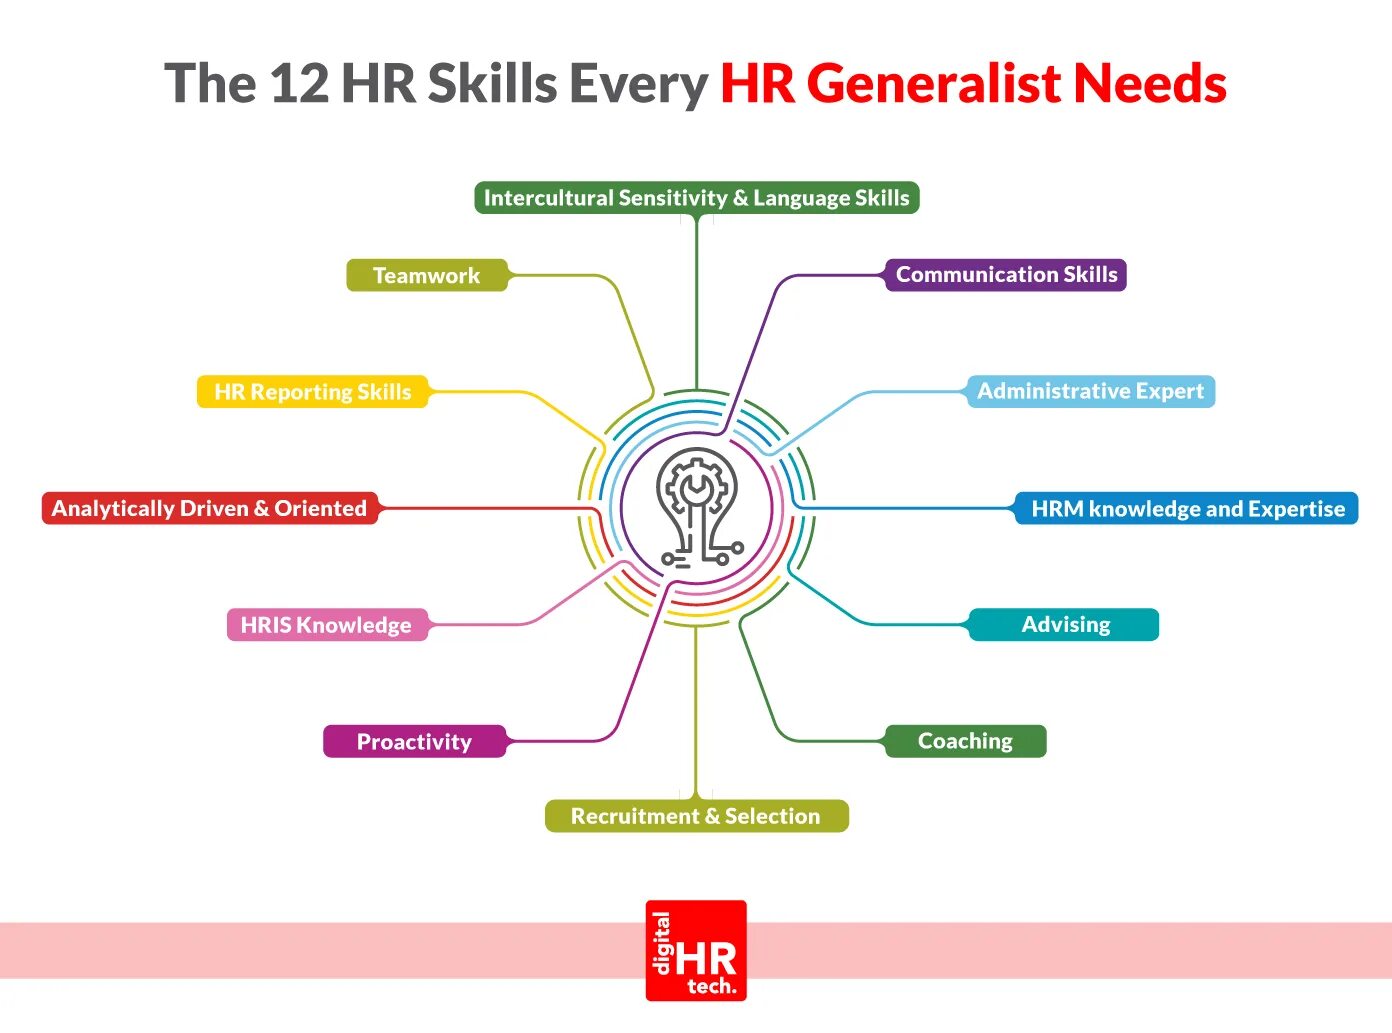 Order skills. HR Generalist. Модель компетенций HR BP. Функции HR Generalist. Мотивация HR Generalist.